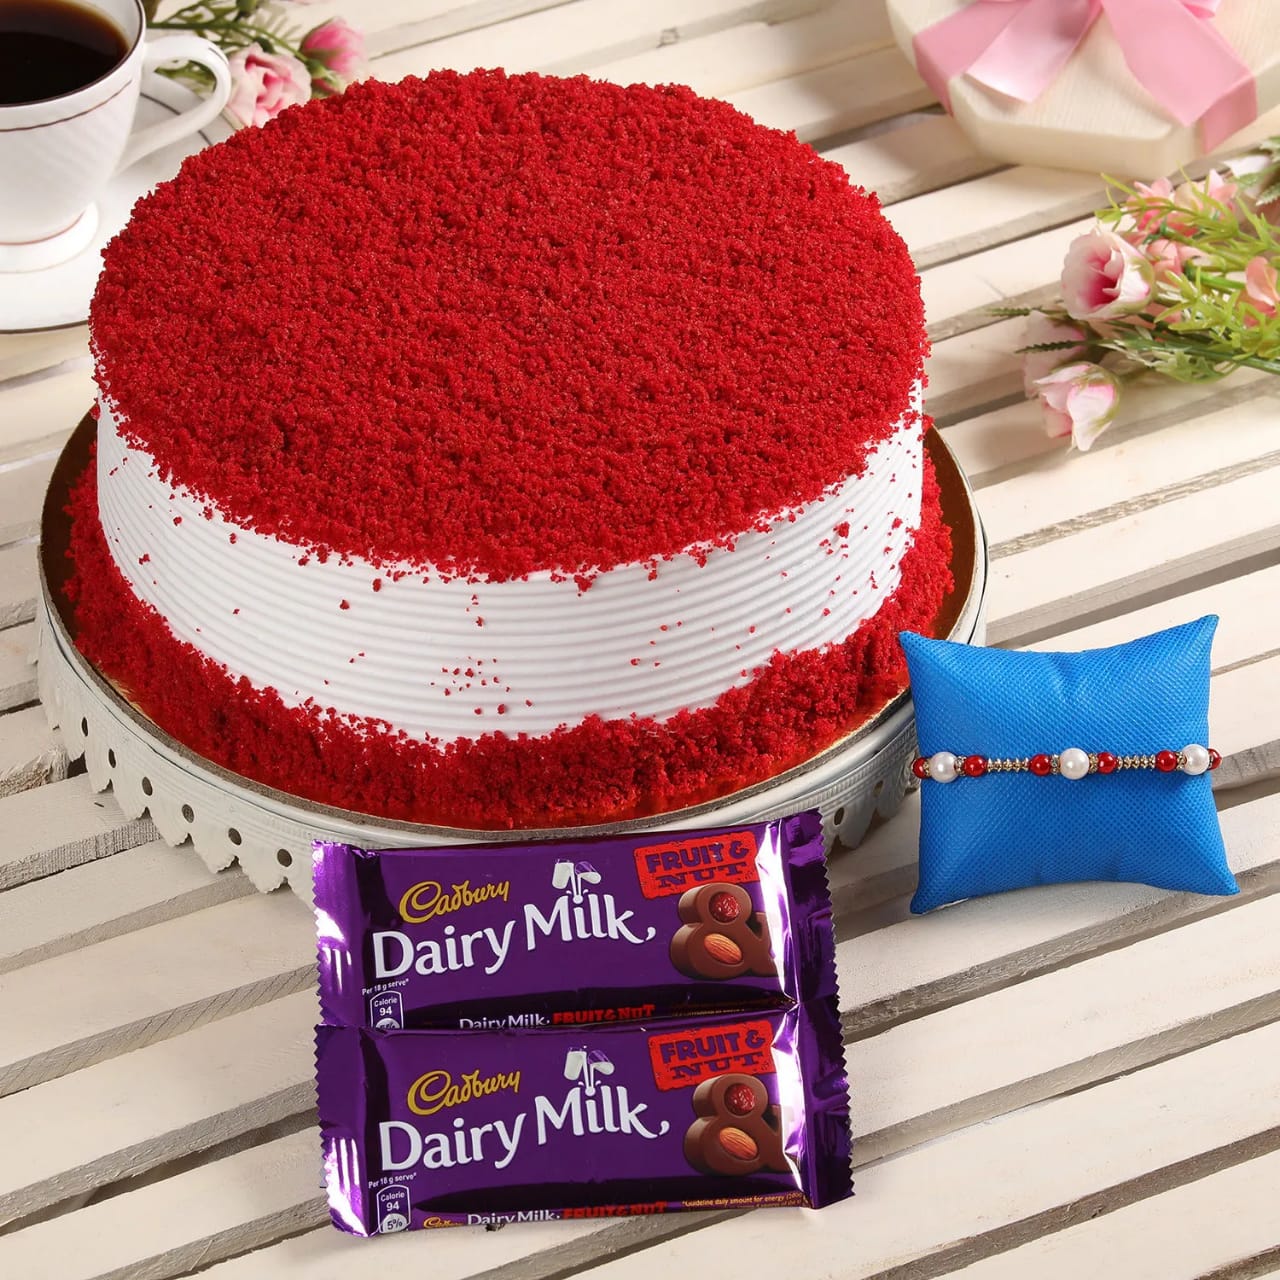 Red Velvet Cake With Rakhi and Chocolates